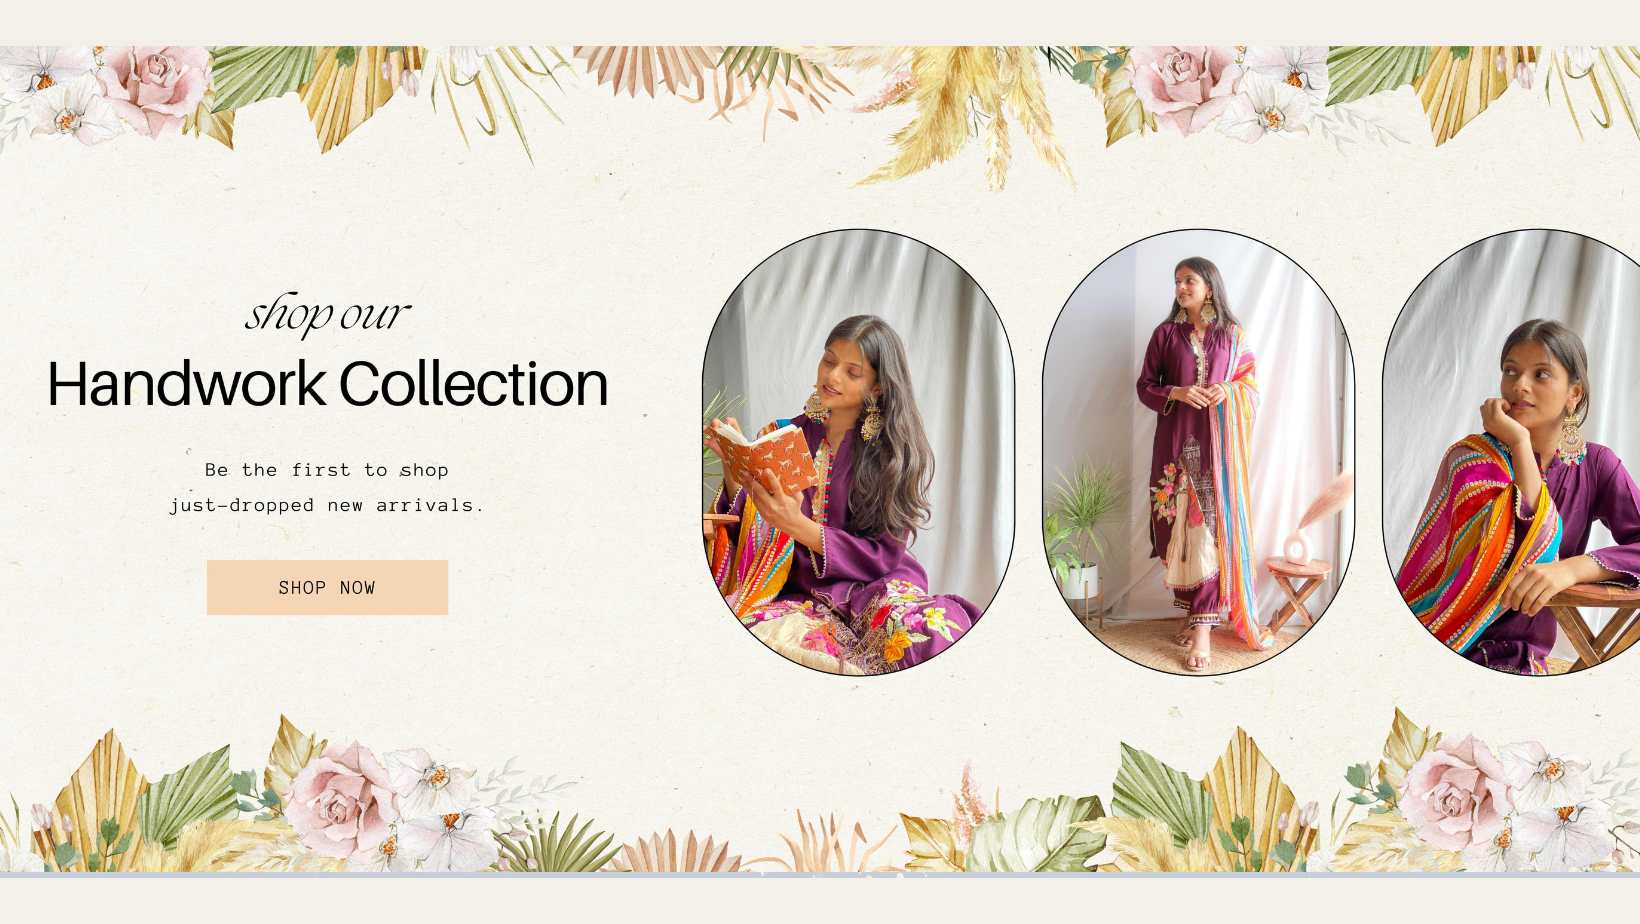 Discover 70+ flipkart cotton sarees below 1000 latest